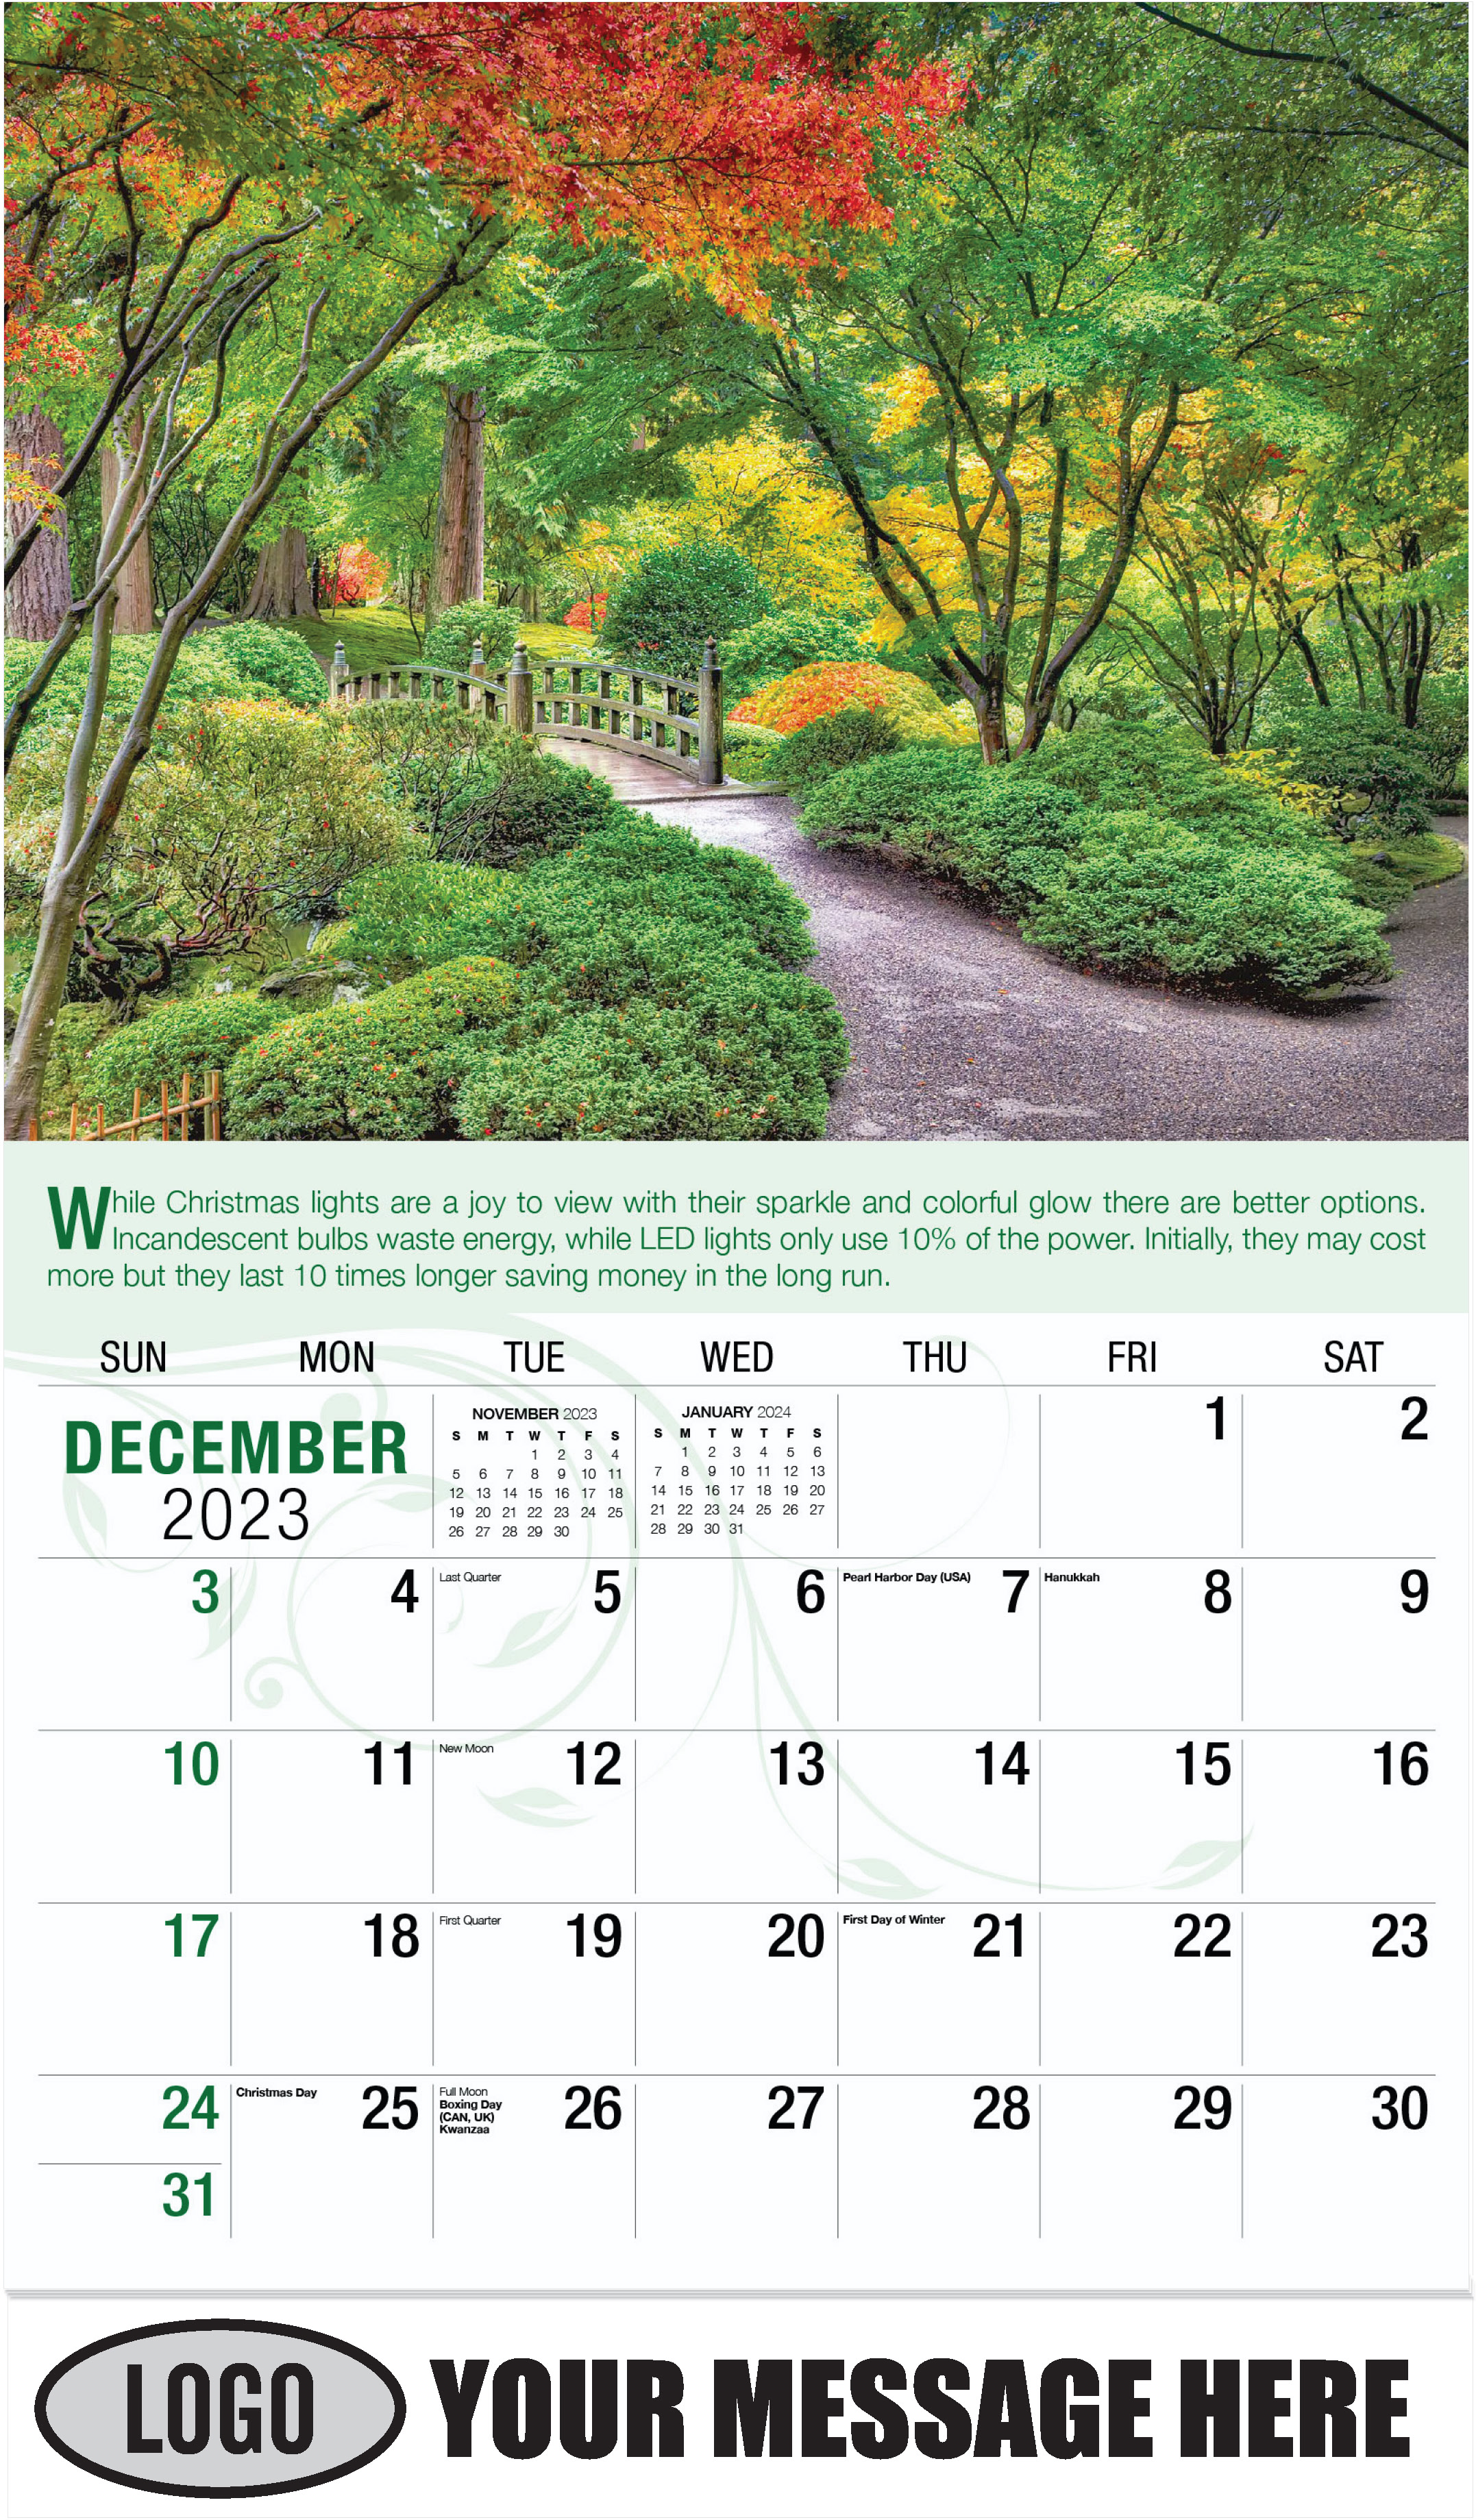 Japanese Garden, Portland, Oregon - December 2023 - Go Green 2023 Promotional Calendar